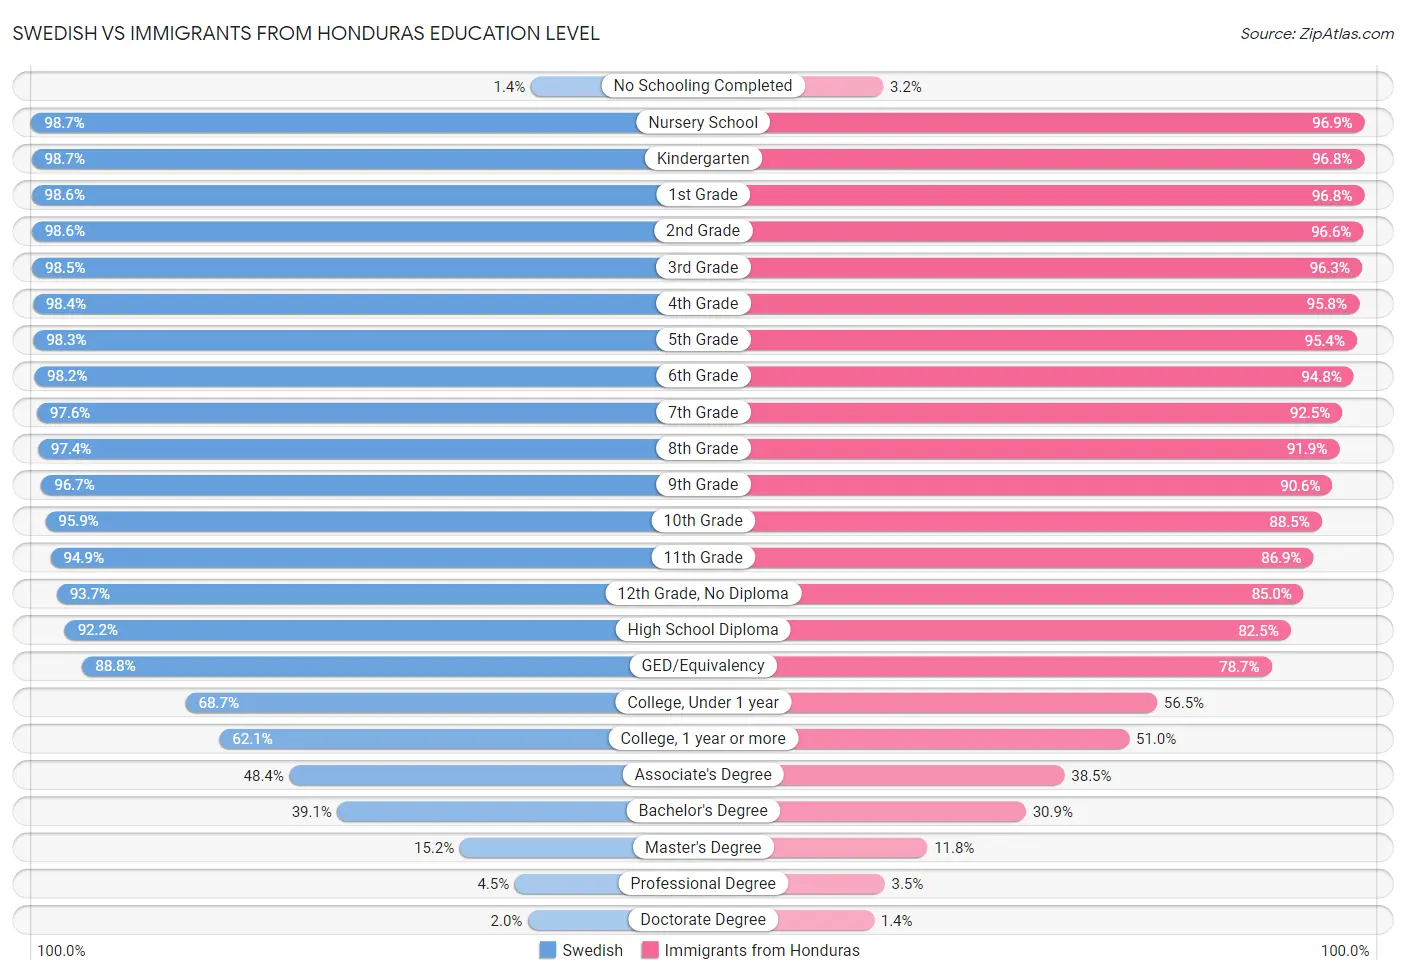 Swedish vs Immigrants from Honduras Education Level